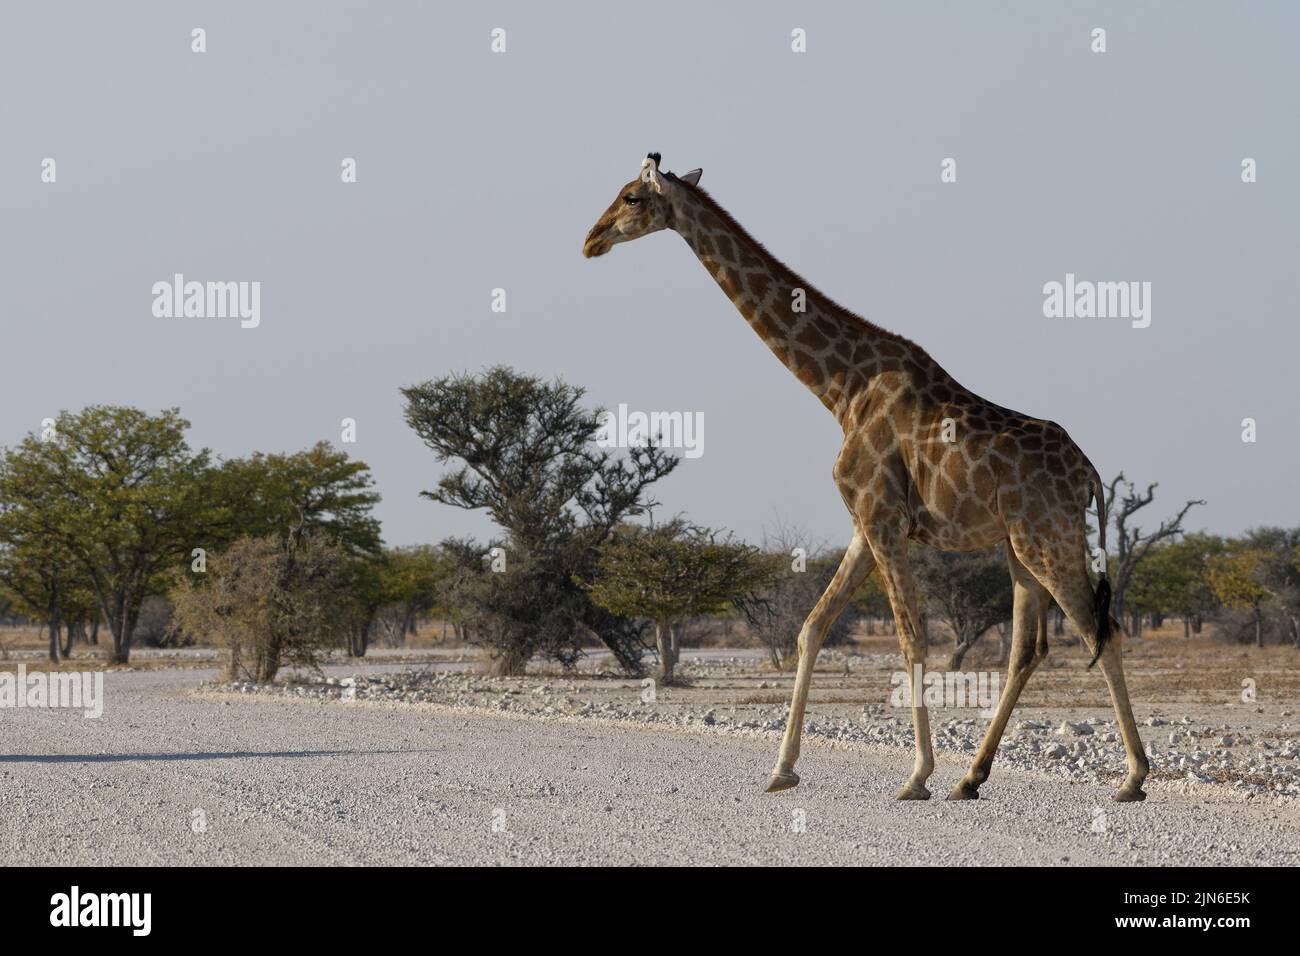 Angolan giraffe (Giraffa camelopardalis angolensis), adult crossing a dirt road, savanna, Etosha National Park, Namibia, Africa Stock Photo